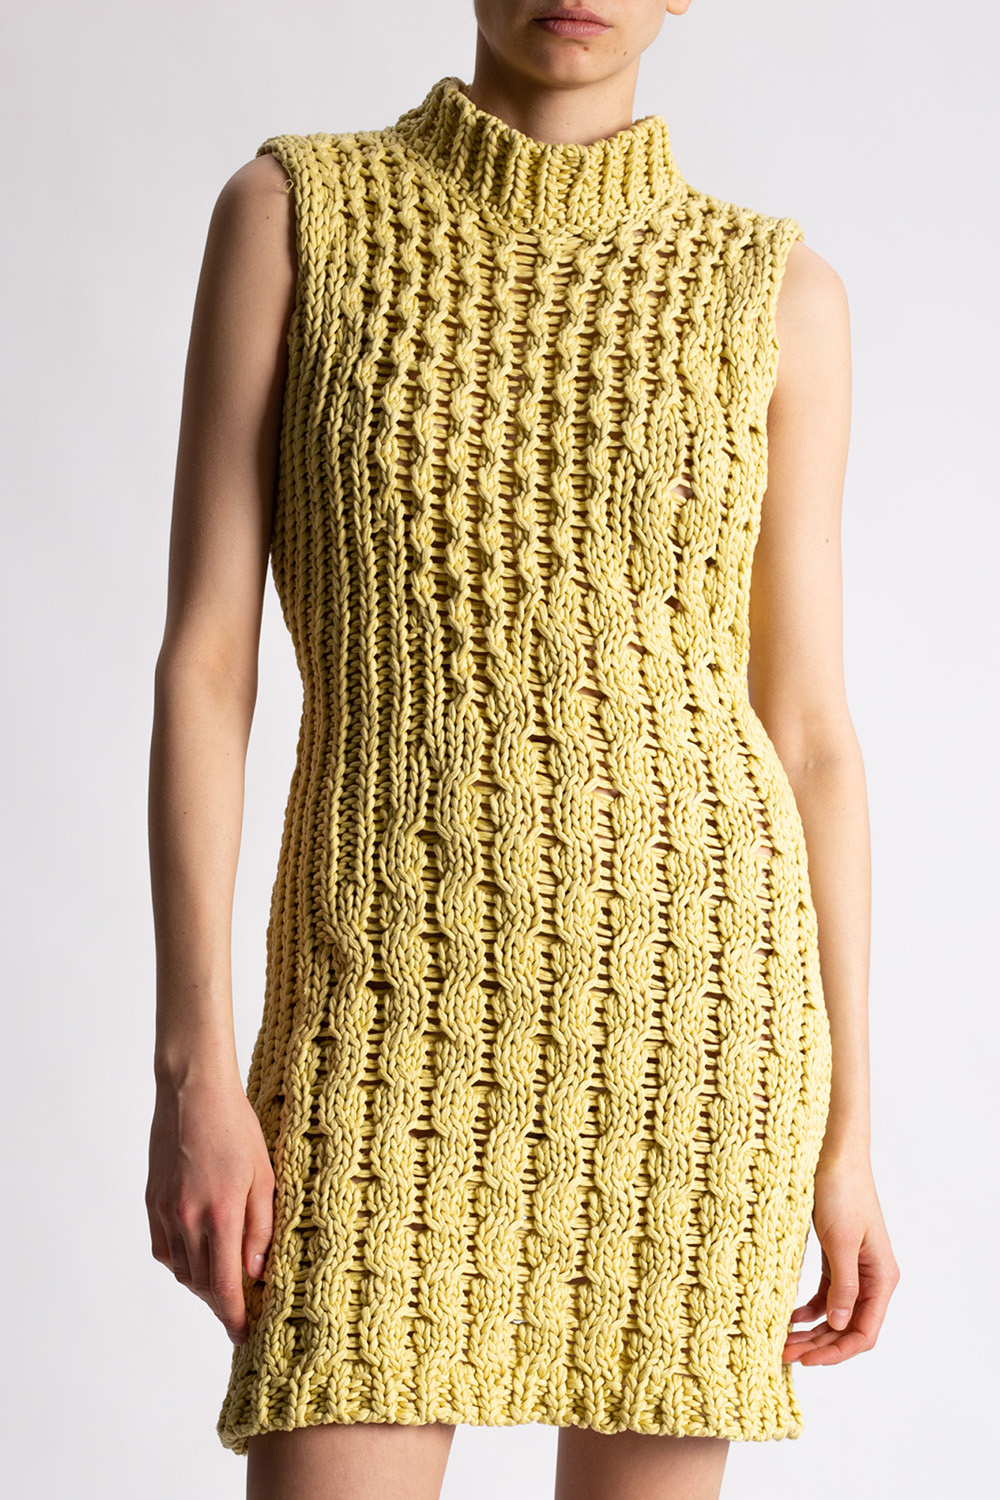 Salvatore Ferragamo Knitted dress